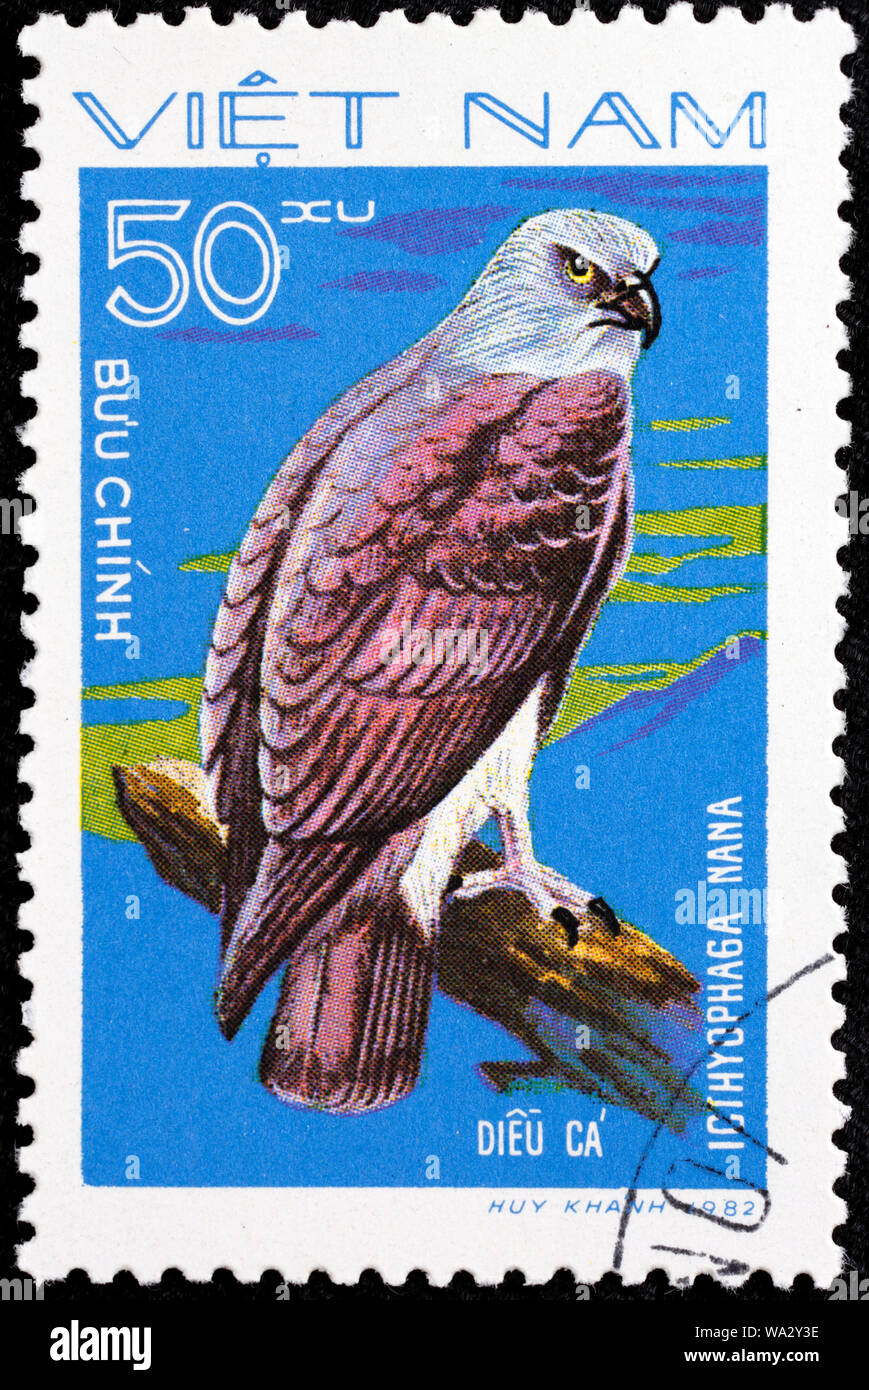 Haliaeetus ichthyaetus, Grey-headed Fish Eagle, Bird of Prey, postage stamp, Vietnam, 1982 Stock Photo